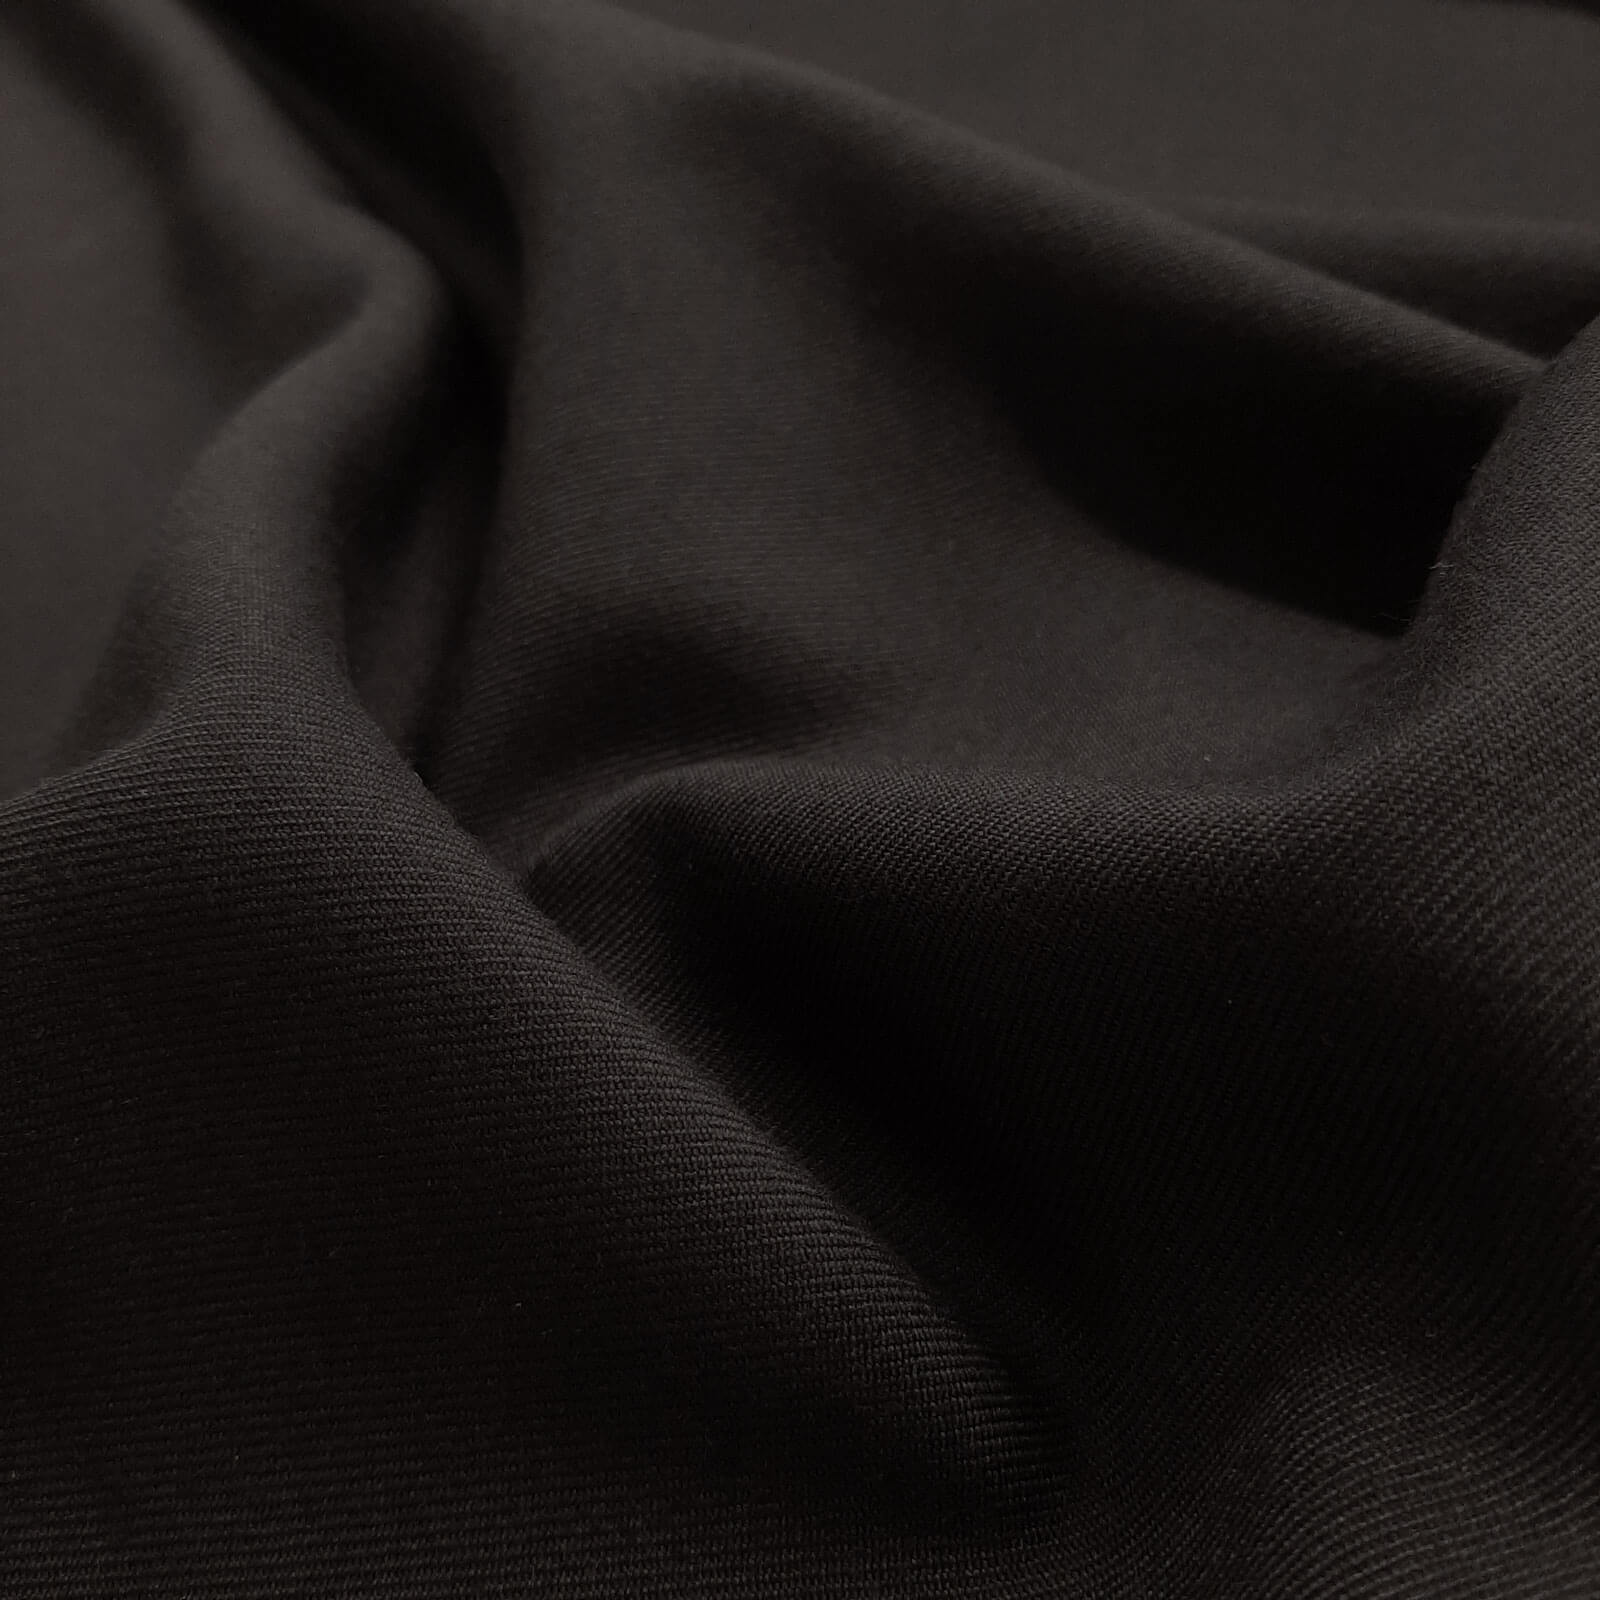 Franziskus - Paño de lana / paño de uniforme - Negro 